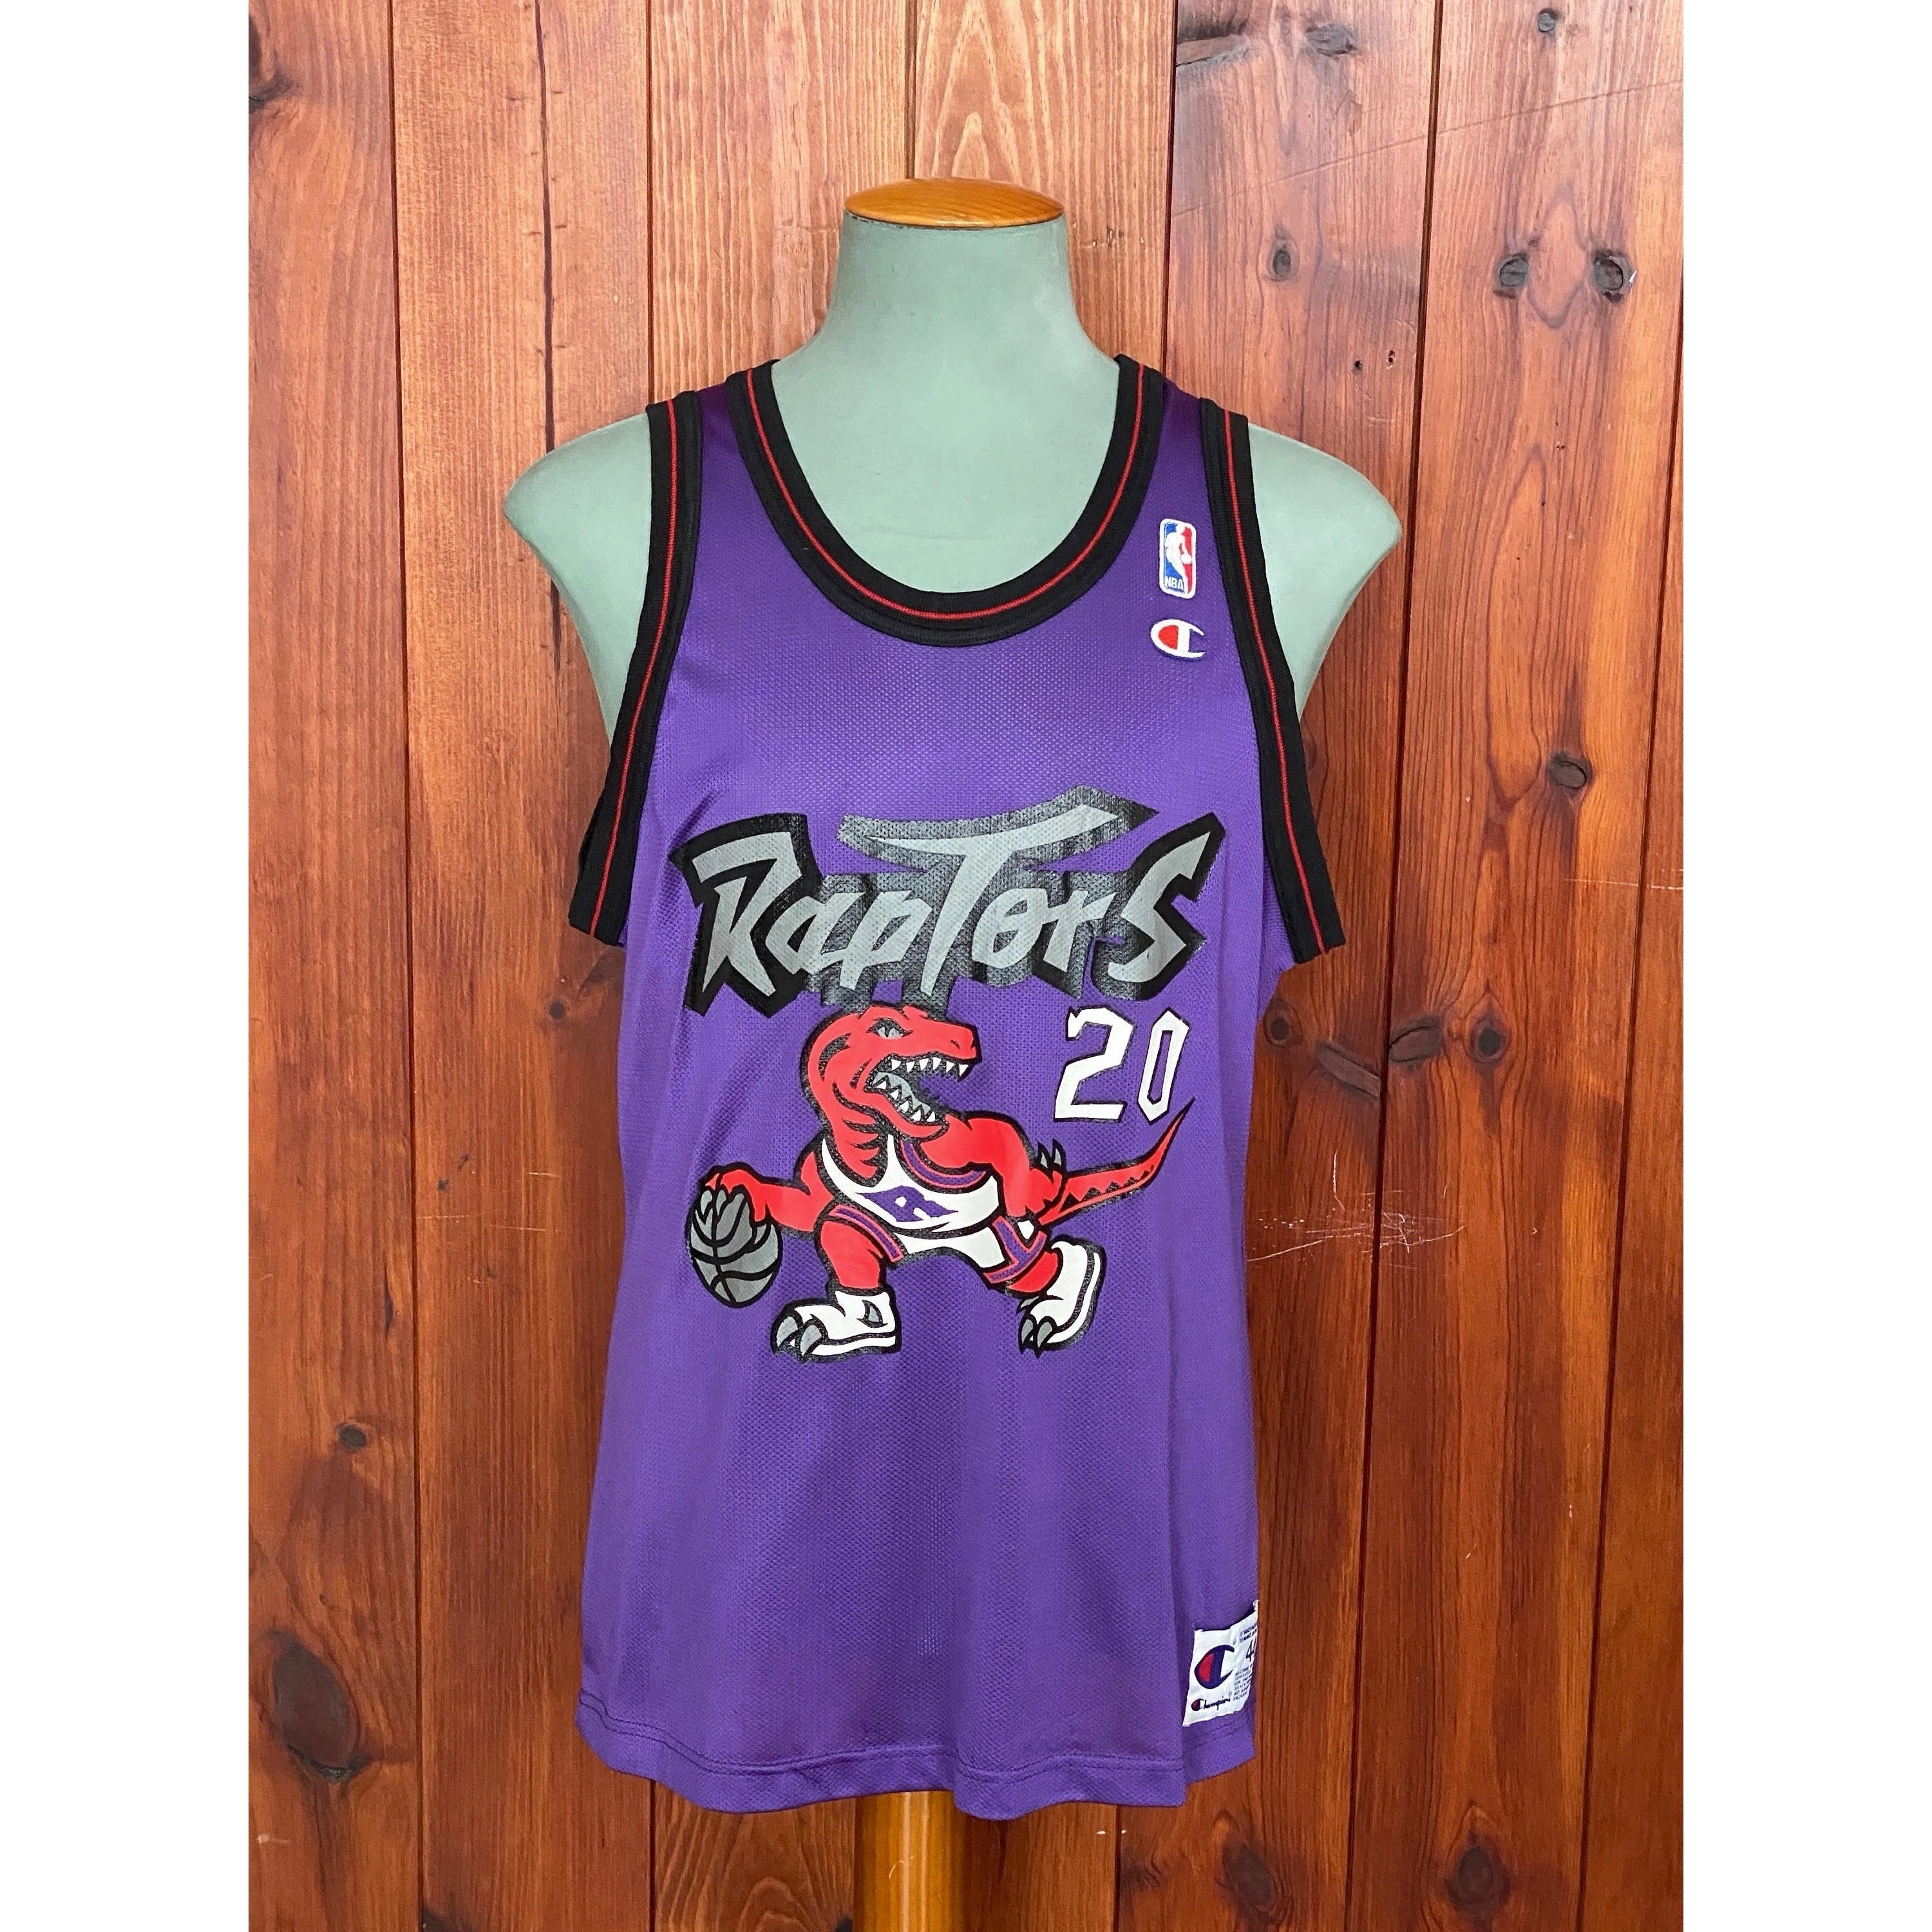 Throwback Raptors Jerseys: Retro, Vintage Toronto Raptors Jerseys (90's)